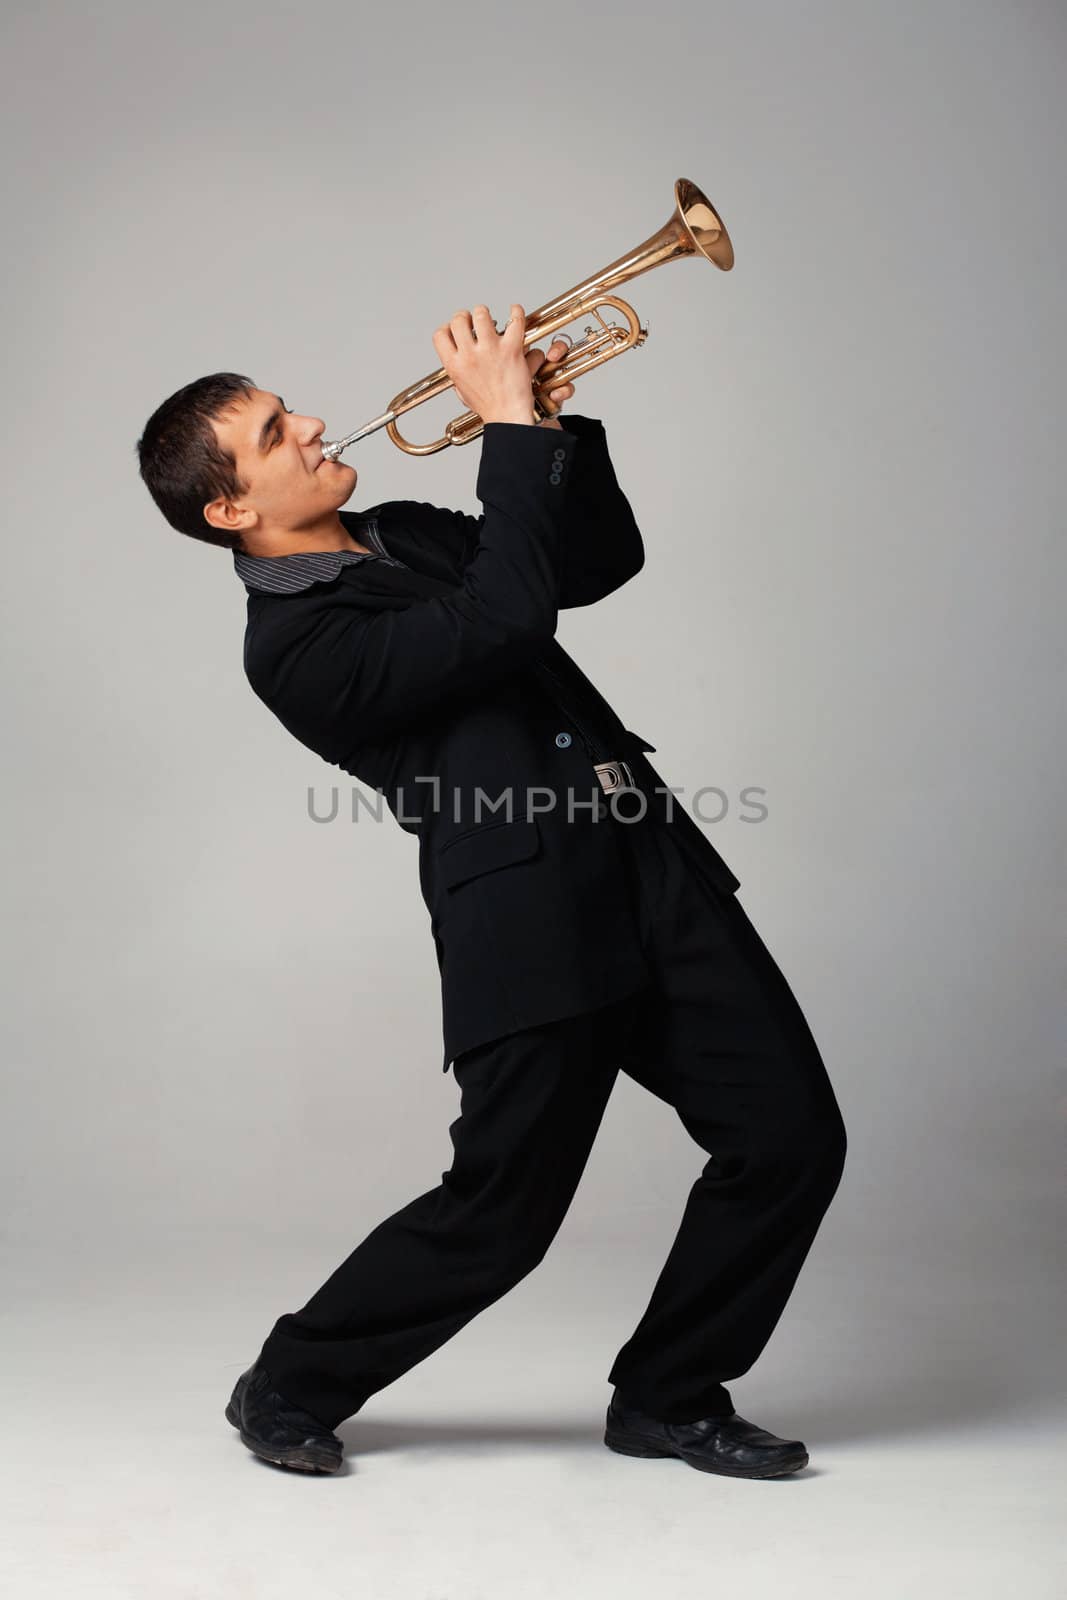 Trumpet Player by romanshyshak